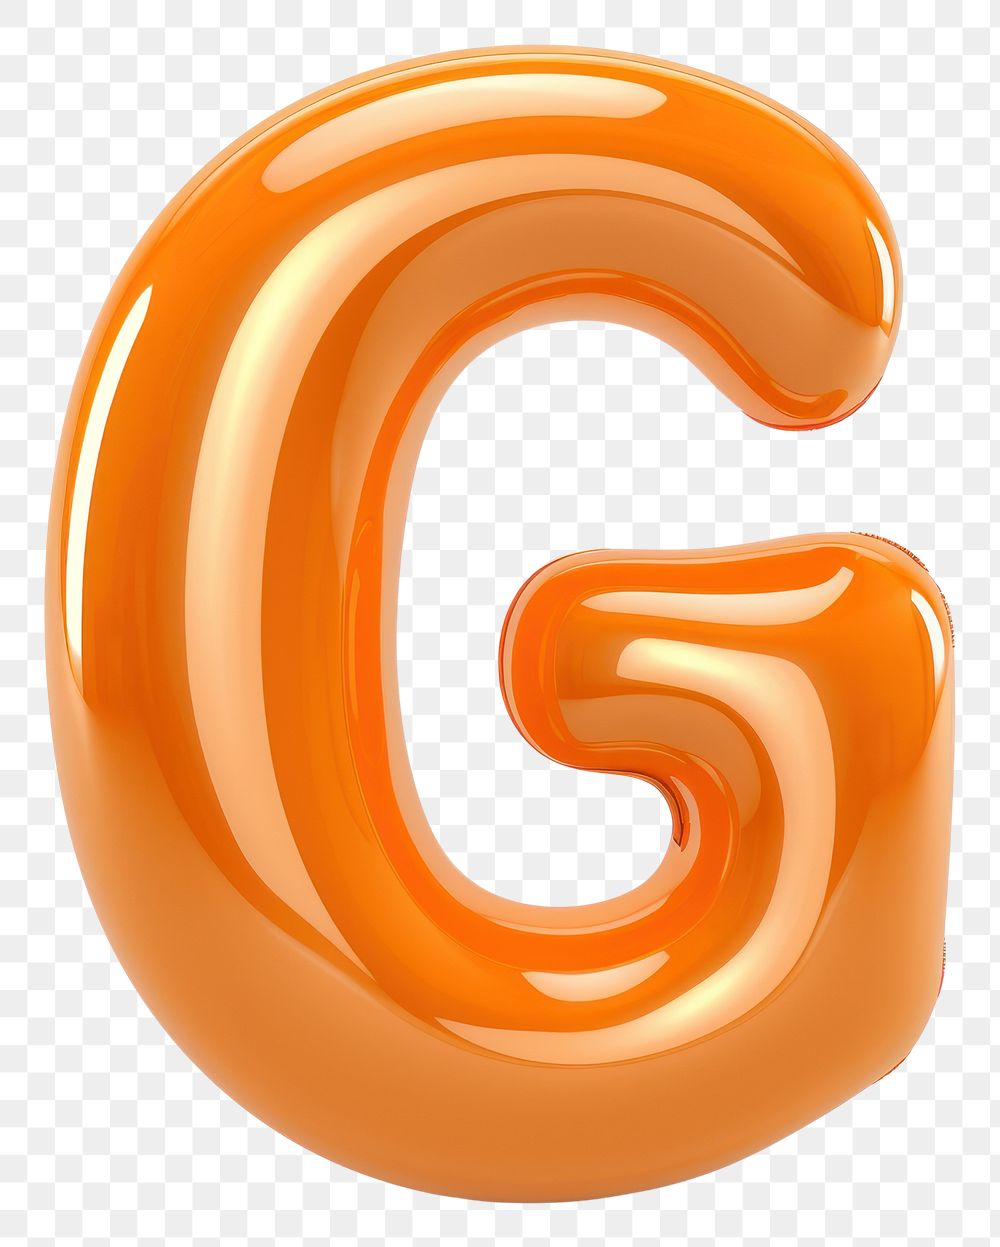 PNG Orange letter G number text white background.